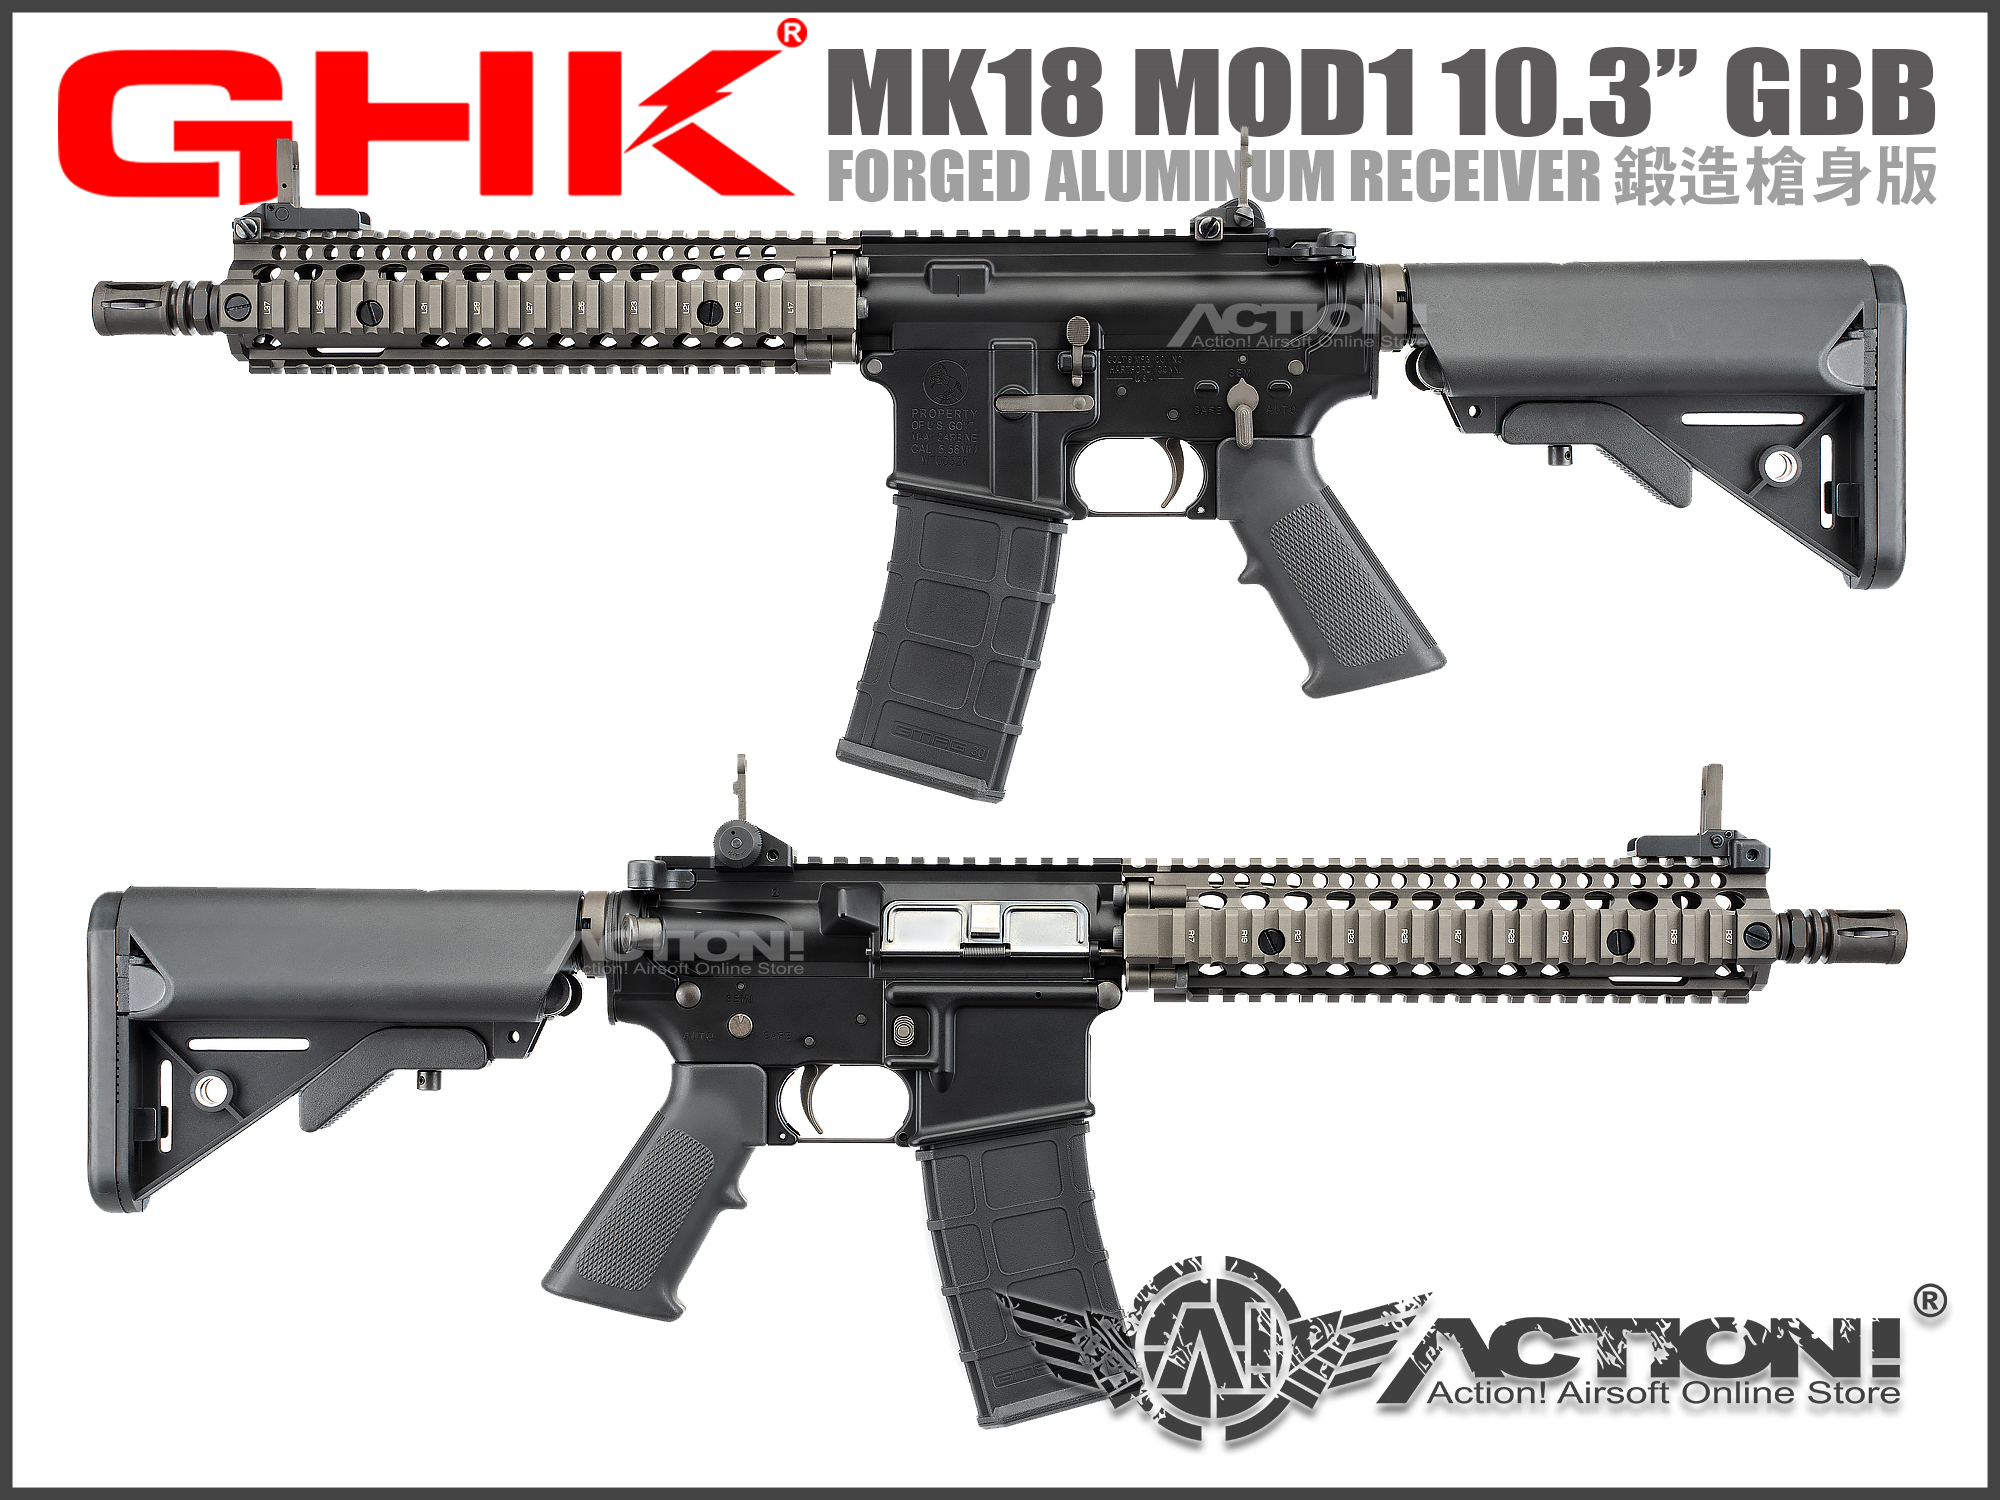 GHK - MK18 MOD1 10.3